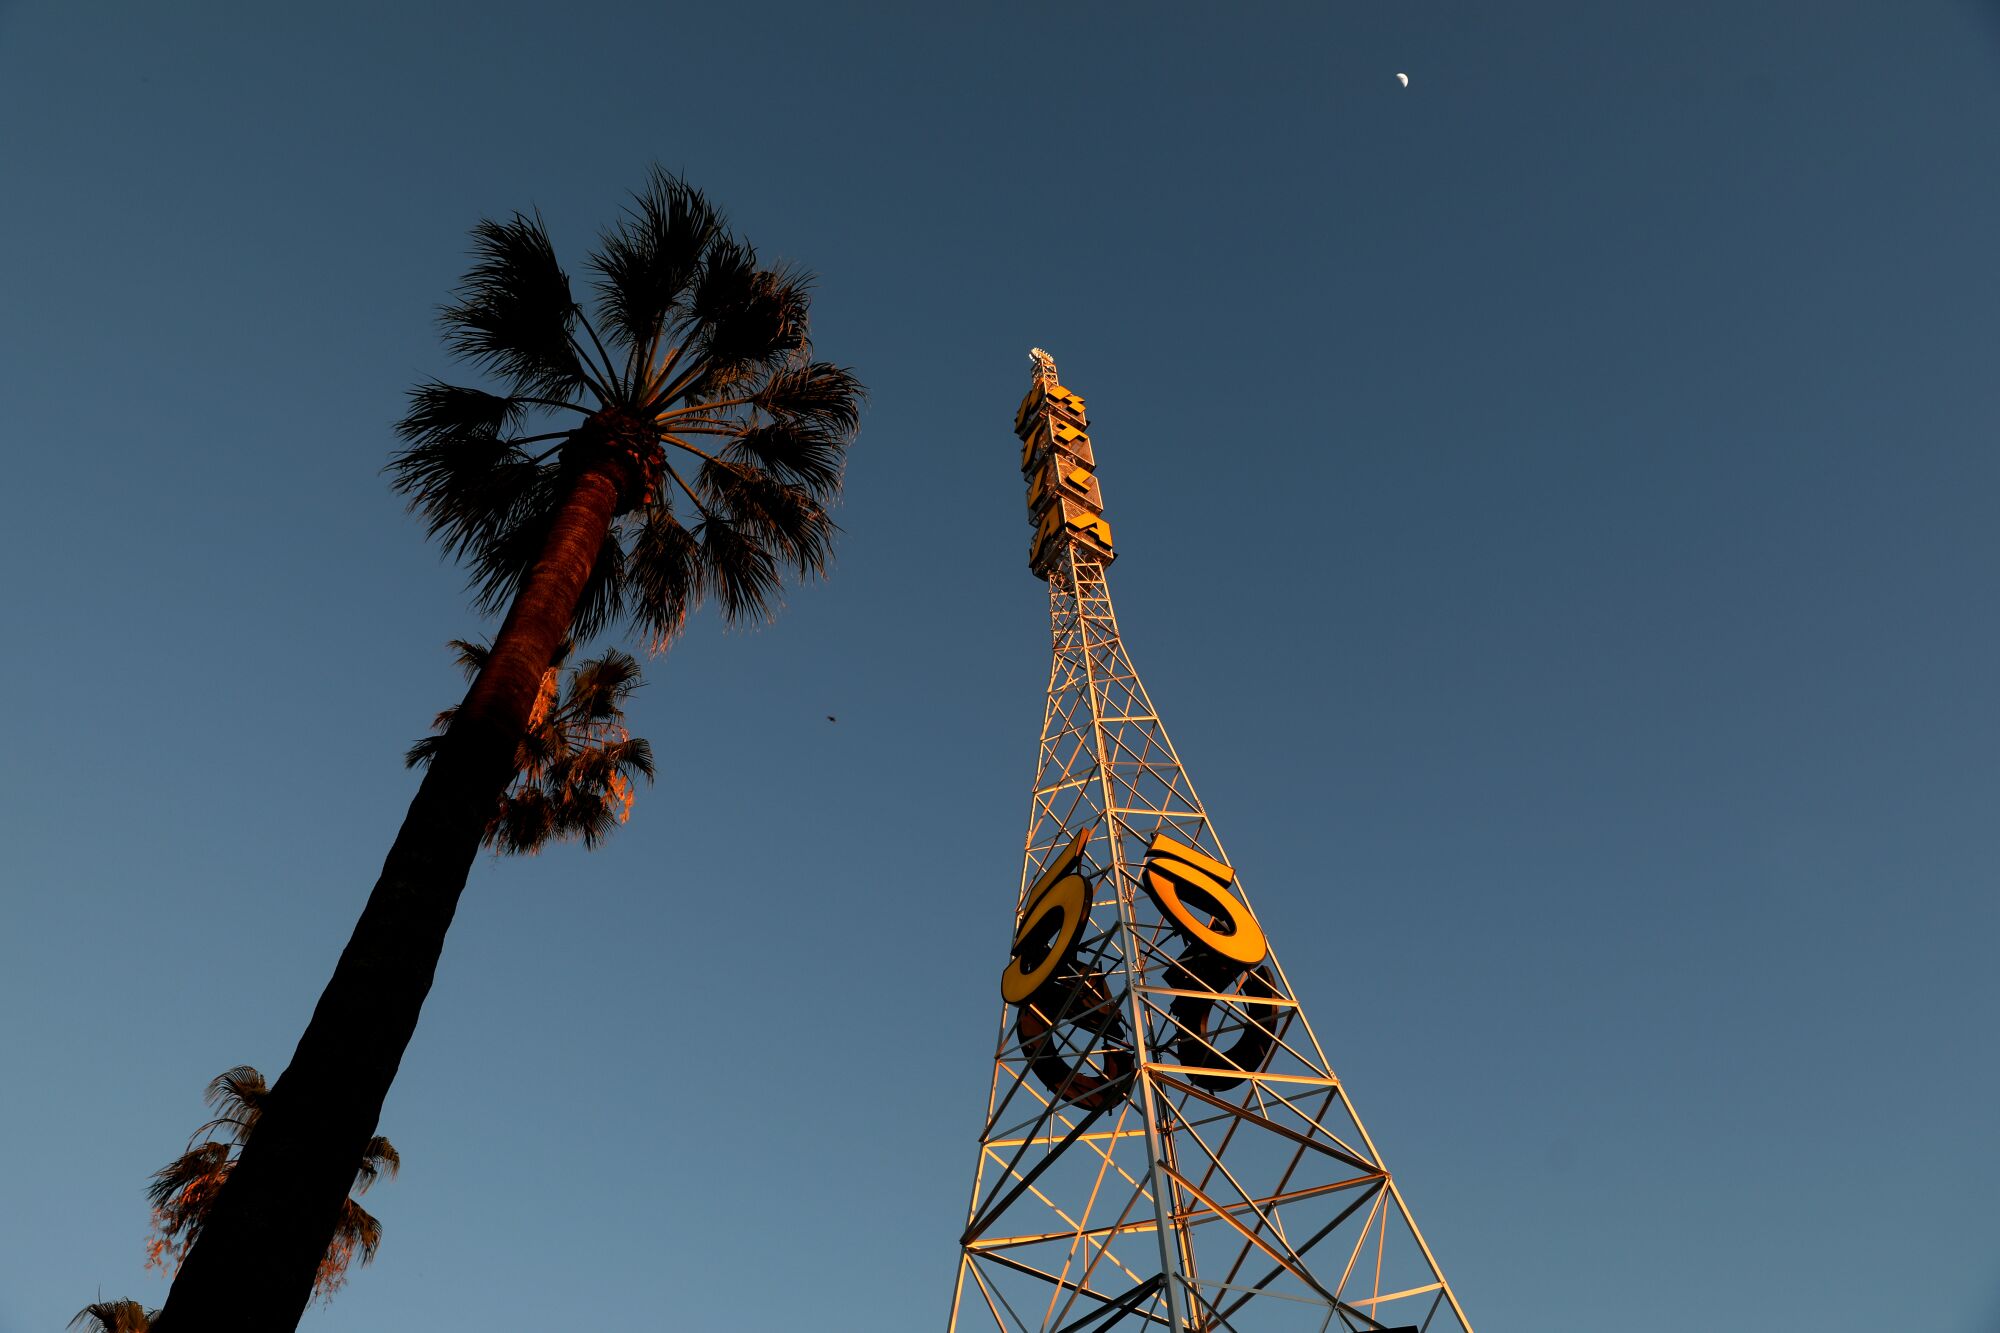 KTLA's transmission tower in Hollywood.